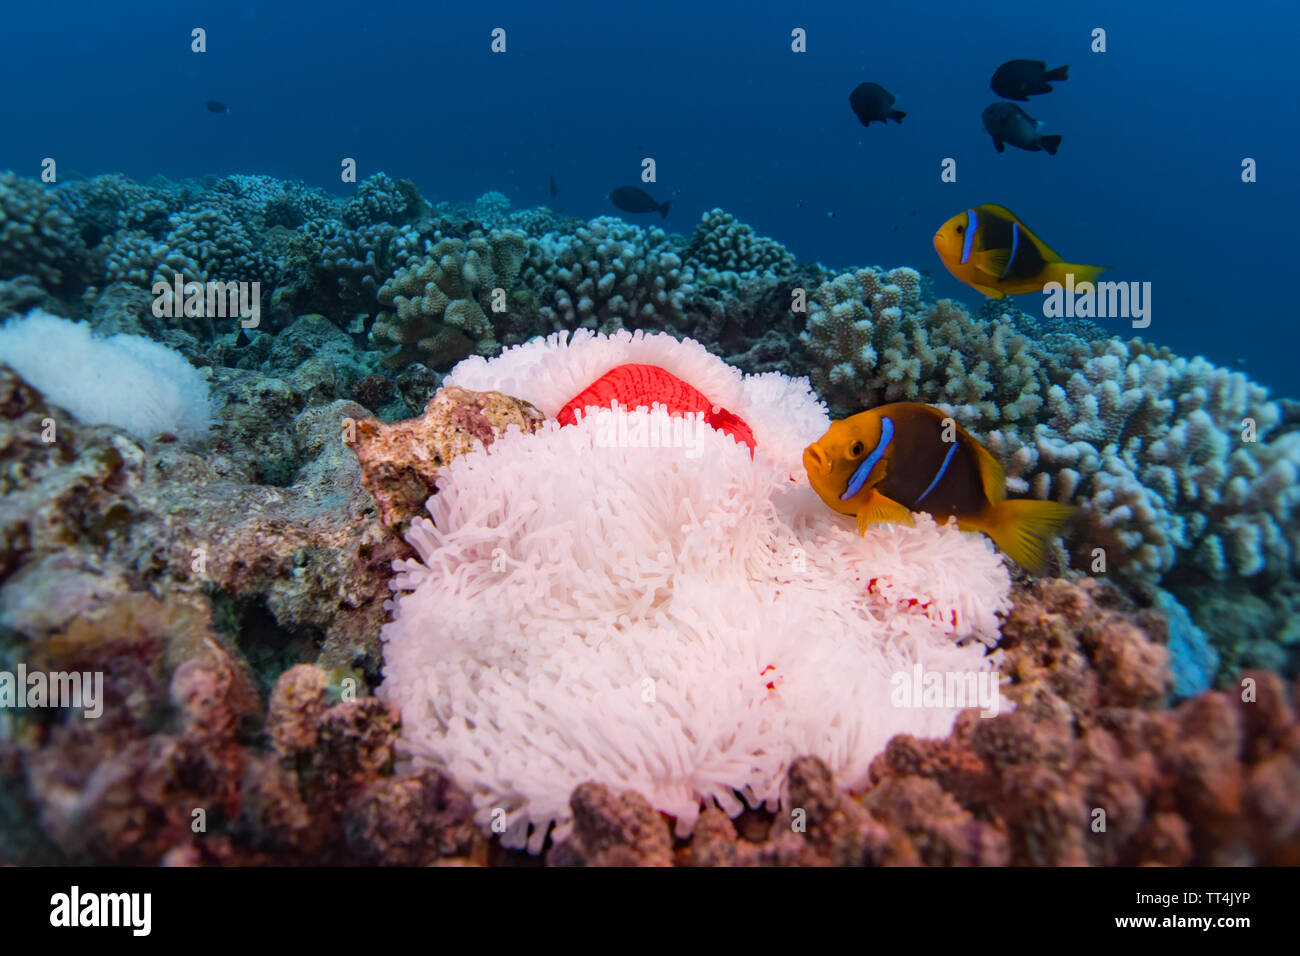 Orange-fin anemonefish in a bleached anemone while Scuba diving in Bora Bora, French Polynesia Stock Photo